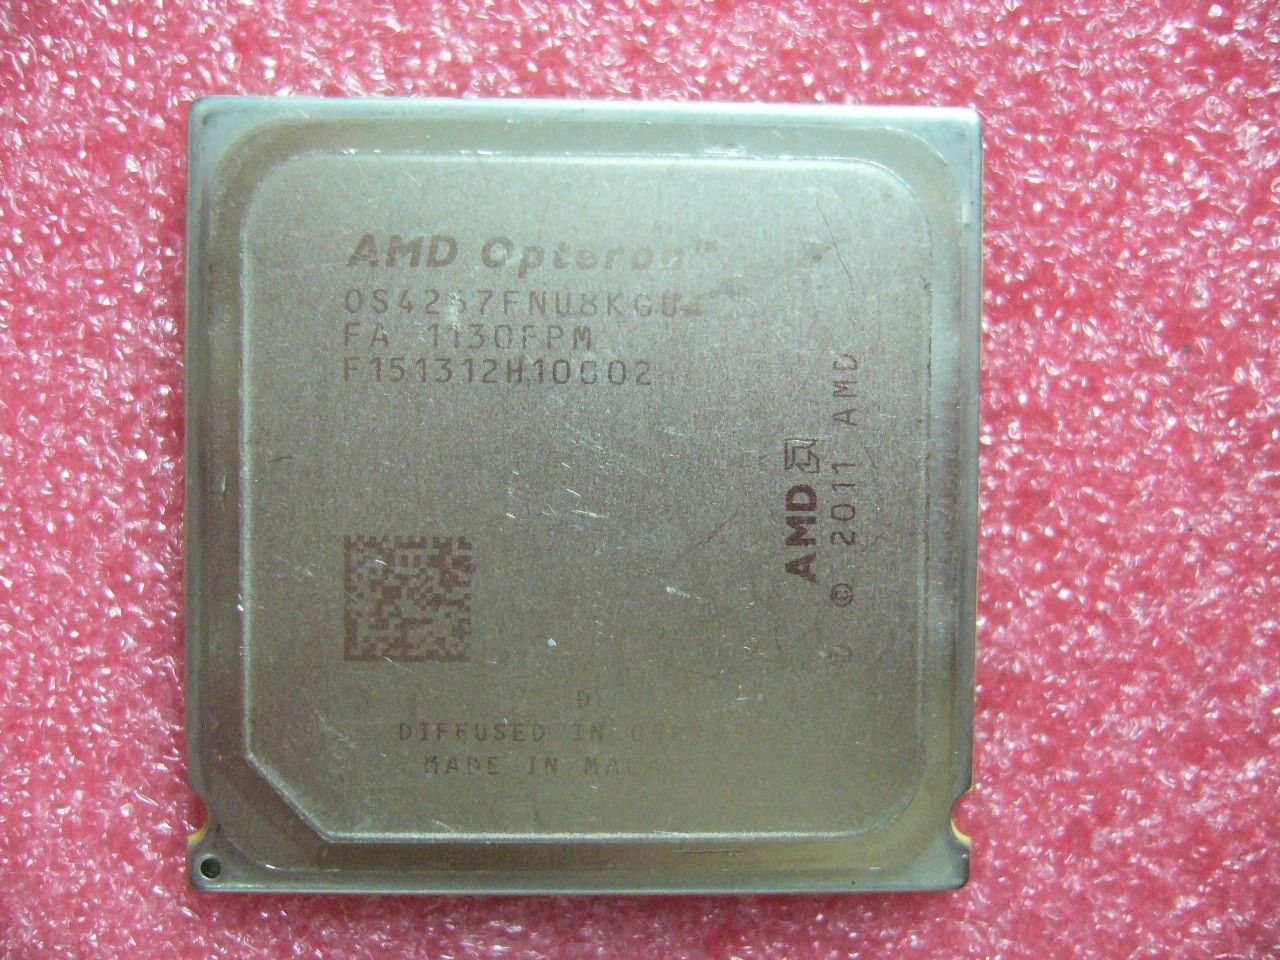 QTY 1x AMD Opteron 4267 2.1 GHz EHE Eight Core (OS4267FNU8KGU) CPU Socket C32